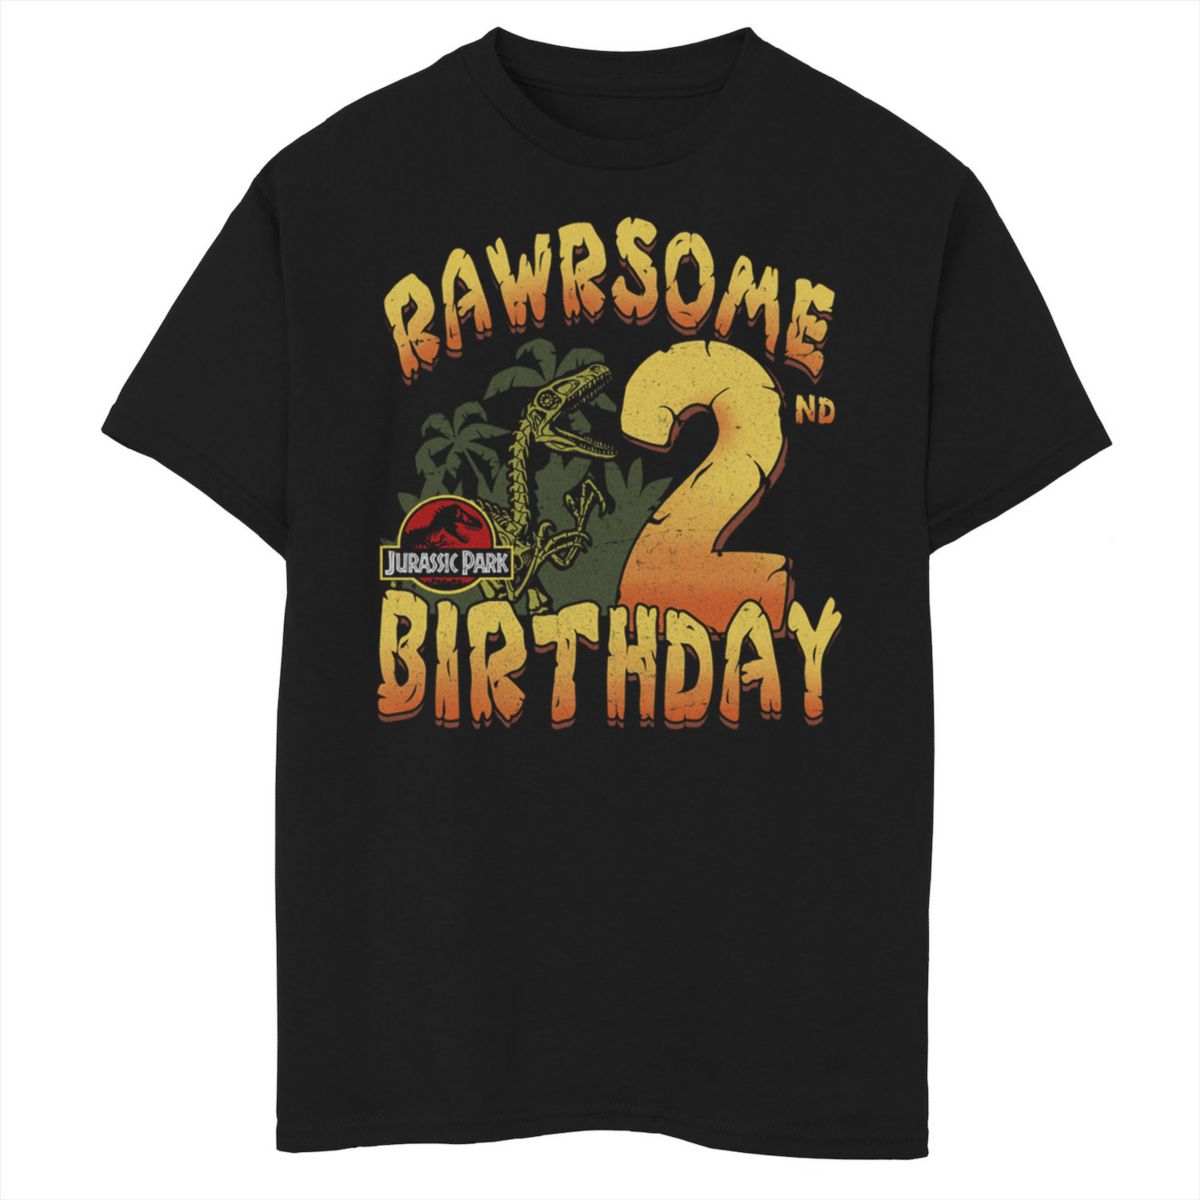 Футболка для мальчиков 8-20 Jurassic Park Rawrsome 2nd Birthday с рисунком Jurassic Park